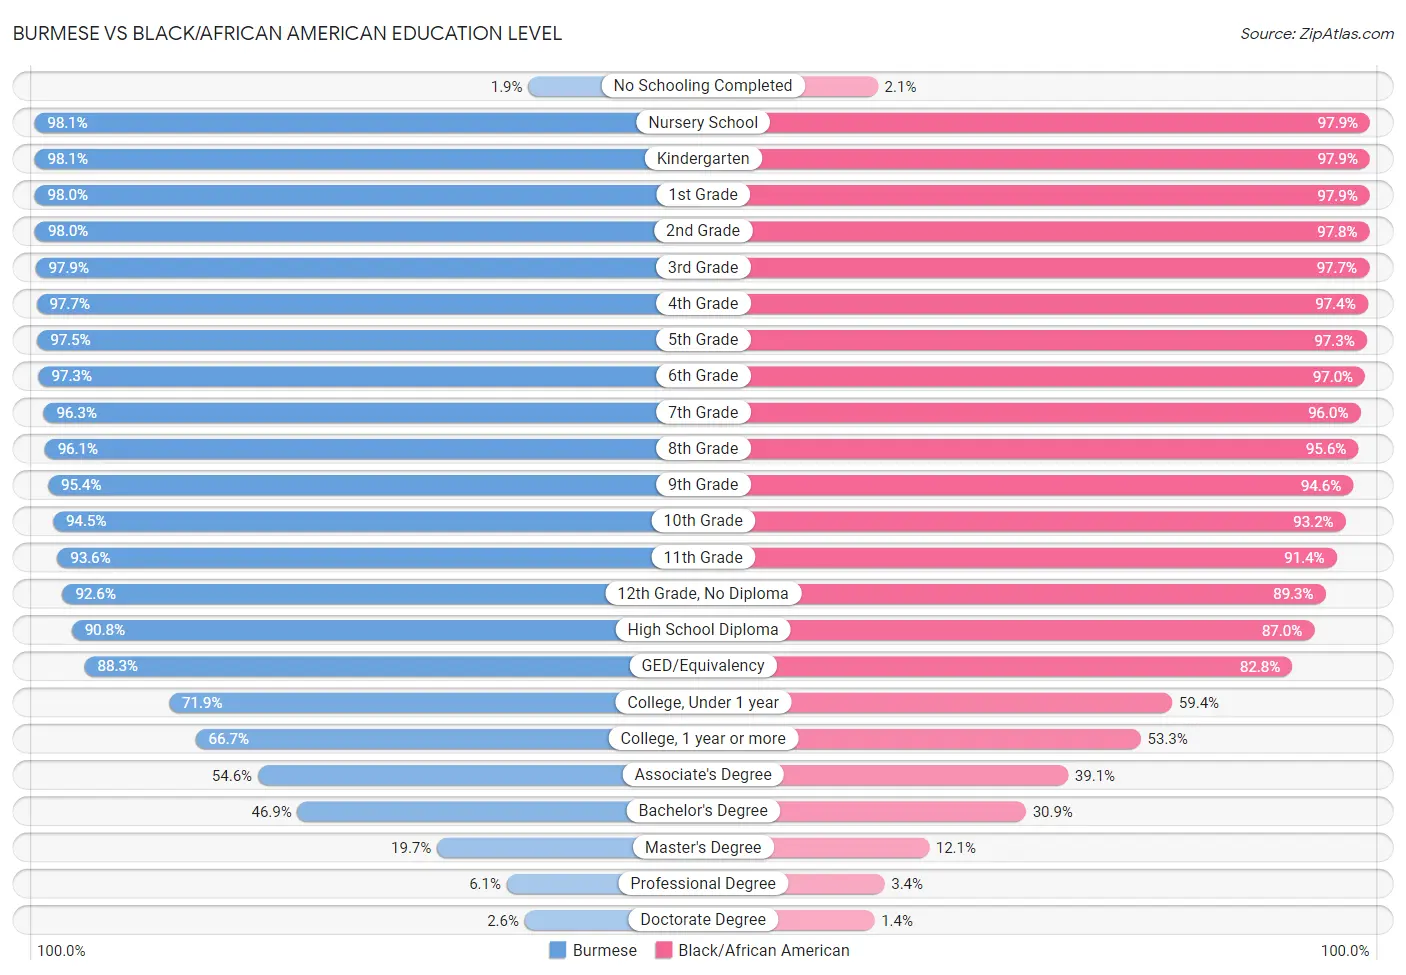 Burmese vs Black/African American Education Level